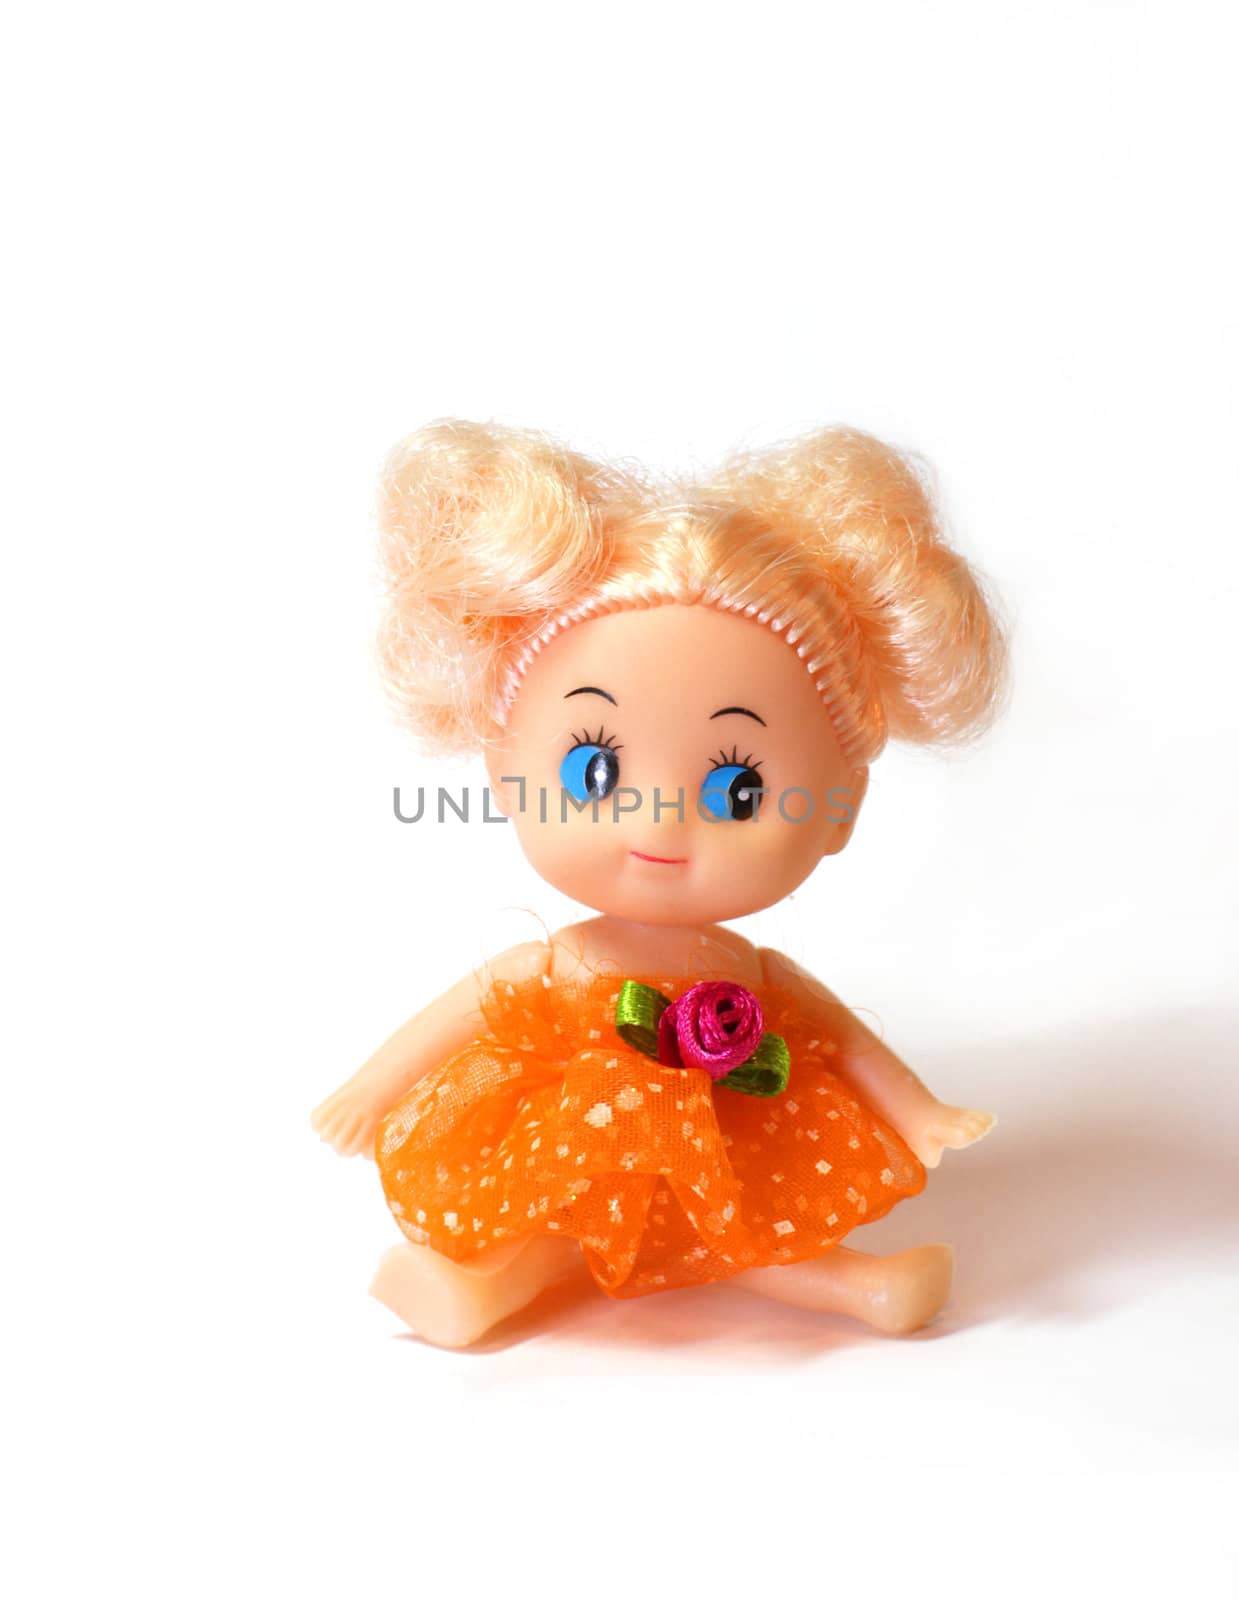 blonde girl baby doll with blue eyes wearing orange dress seated on white background